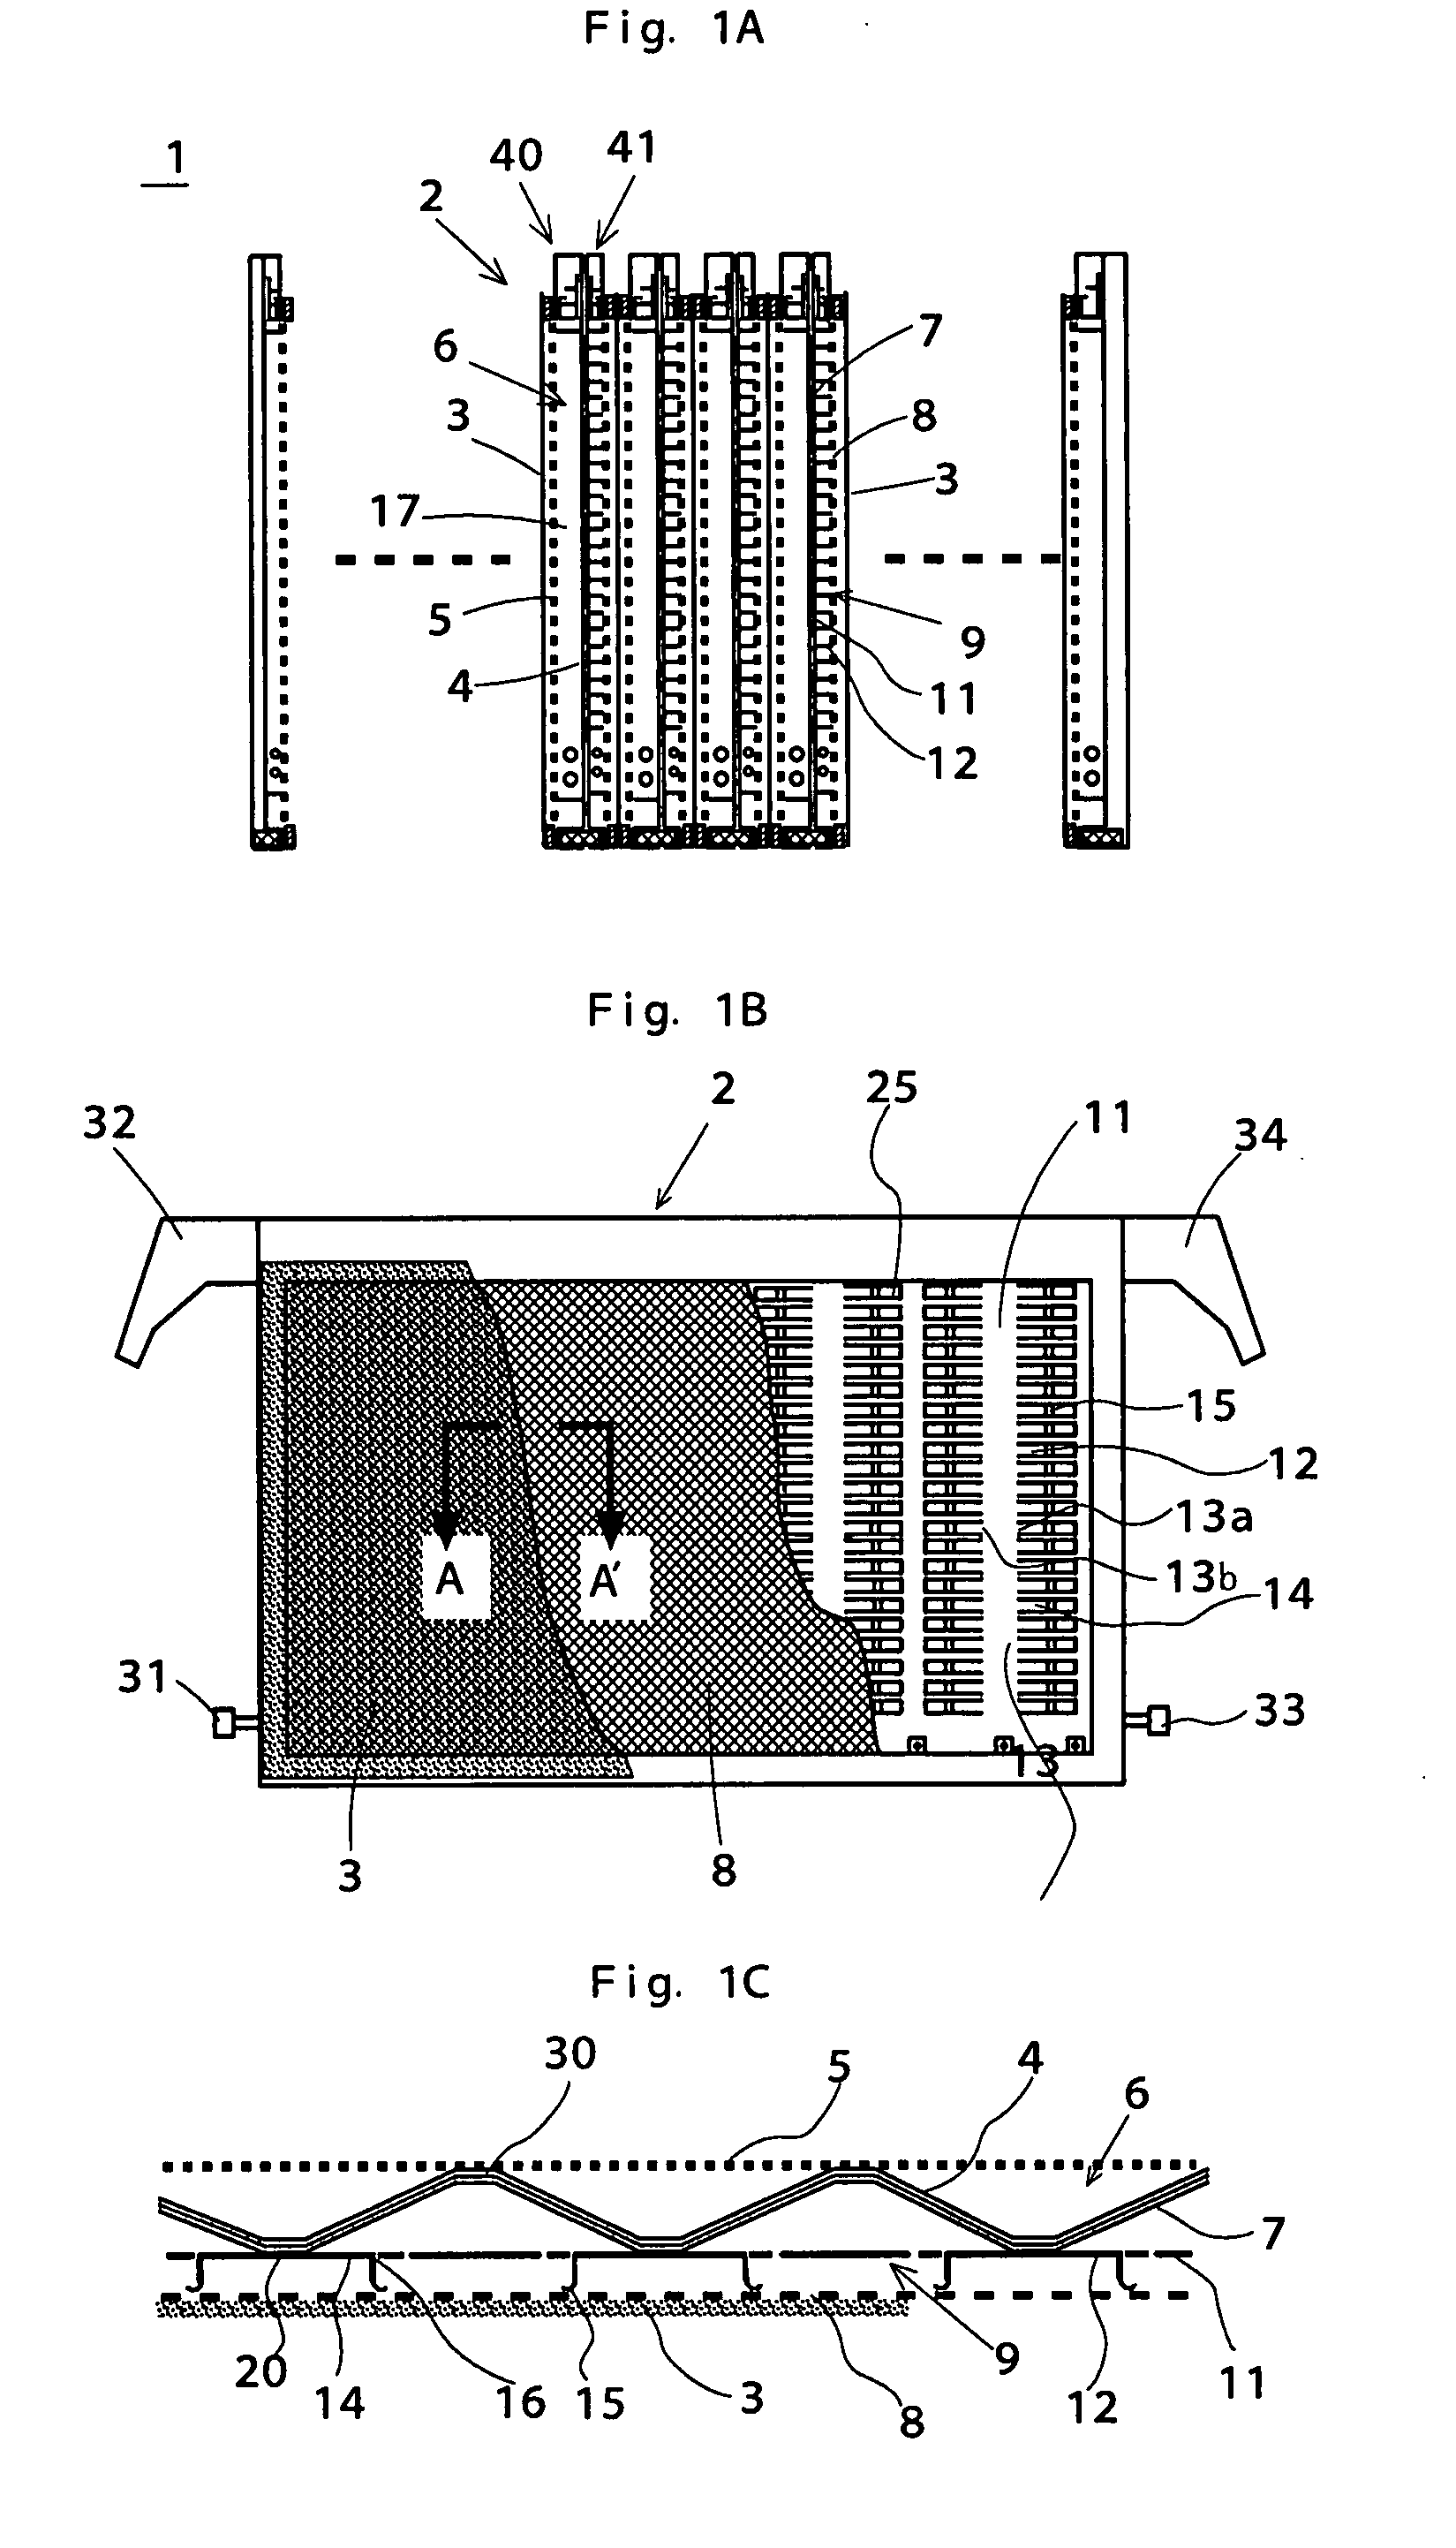 Ion exchange membrane electrolyzer